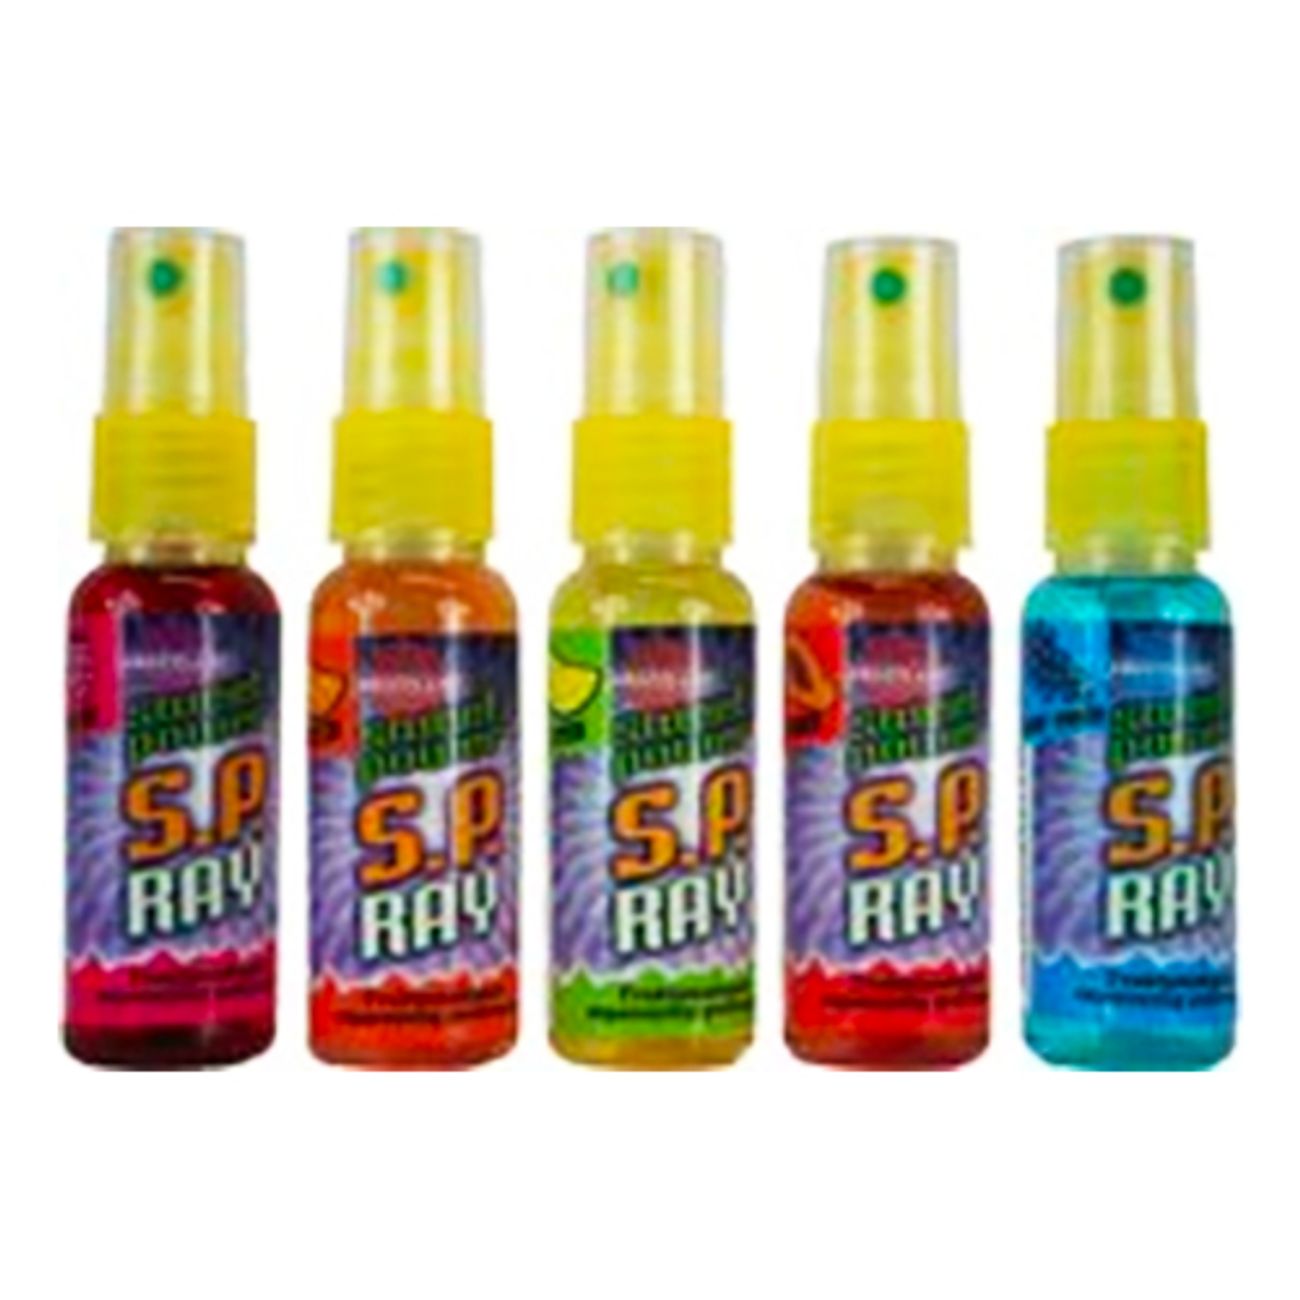 candy-spraygodisspray-79423-1